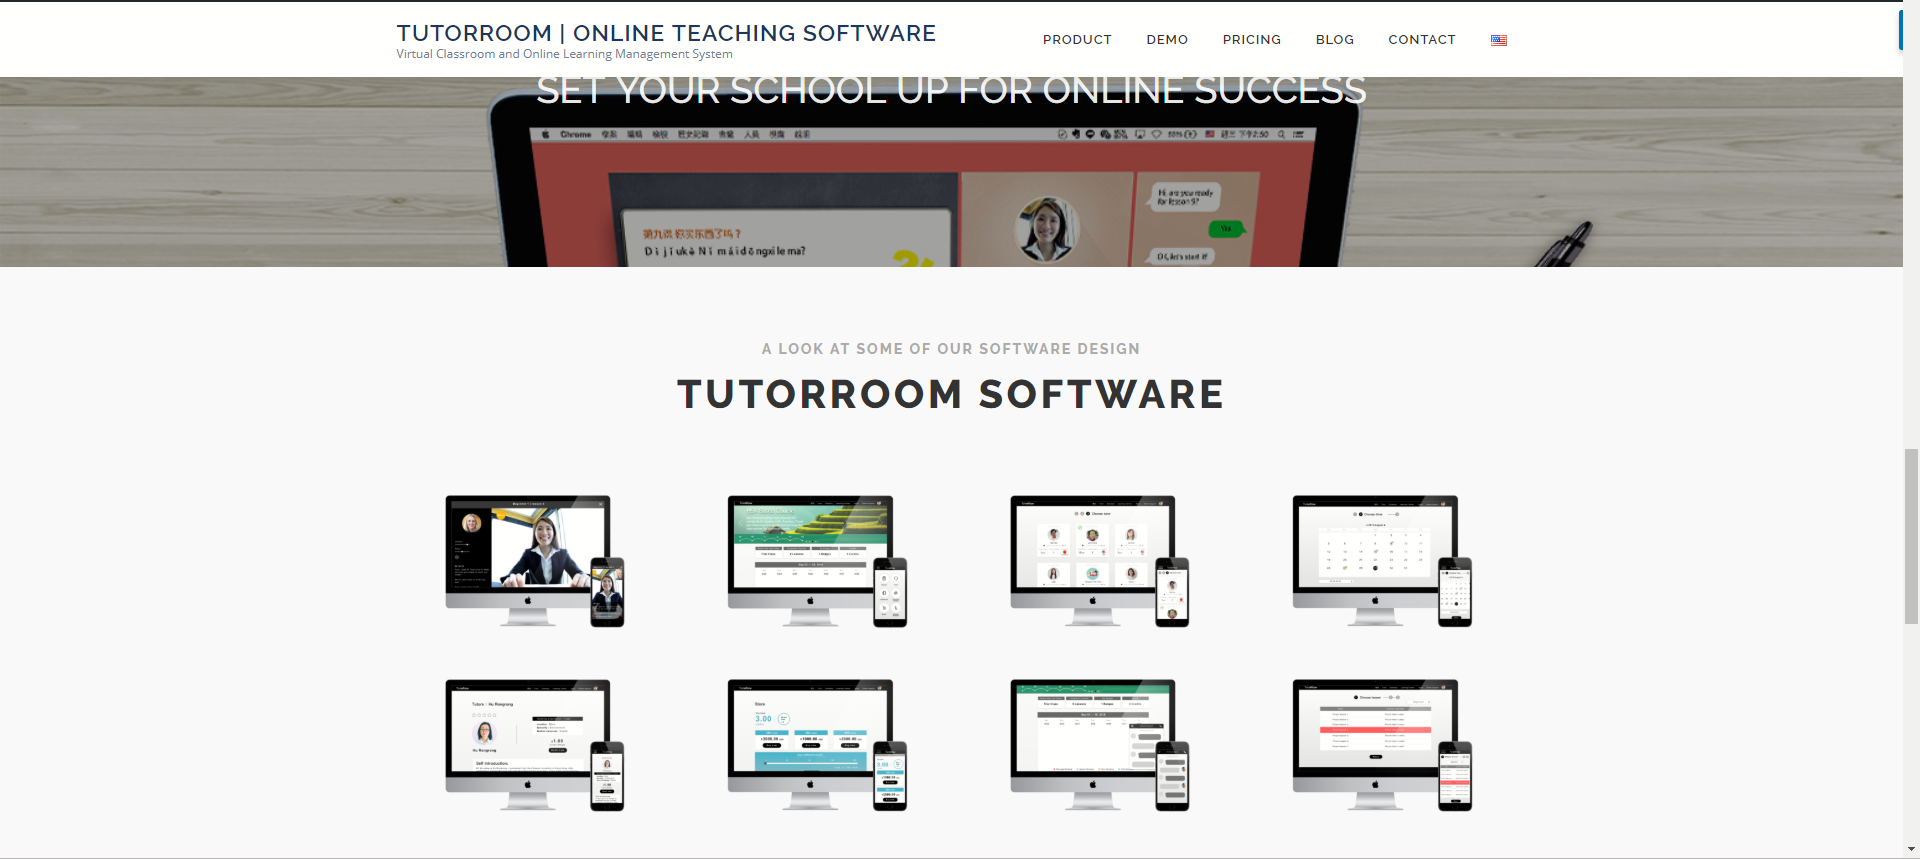 free online whiteboards for tutoring